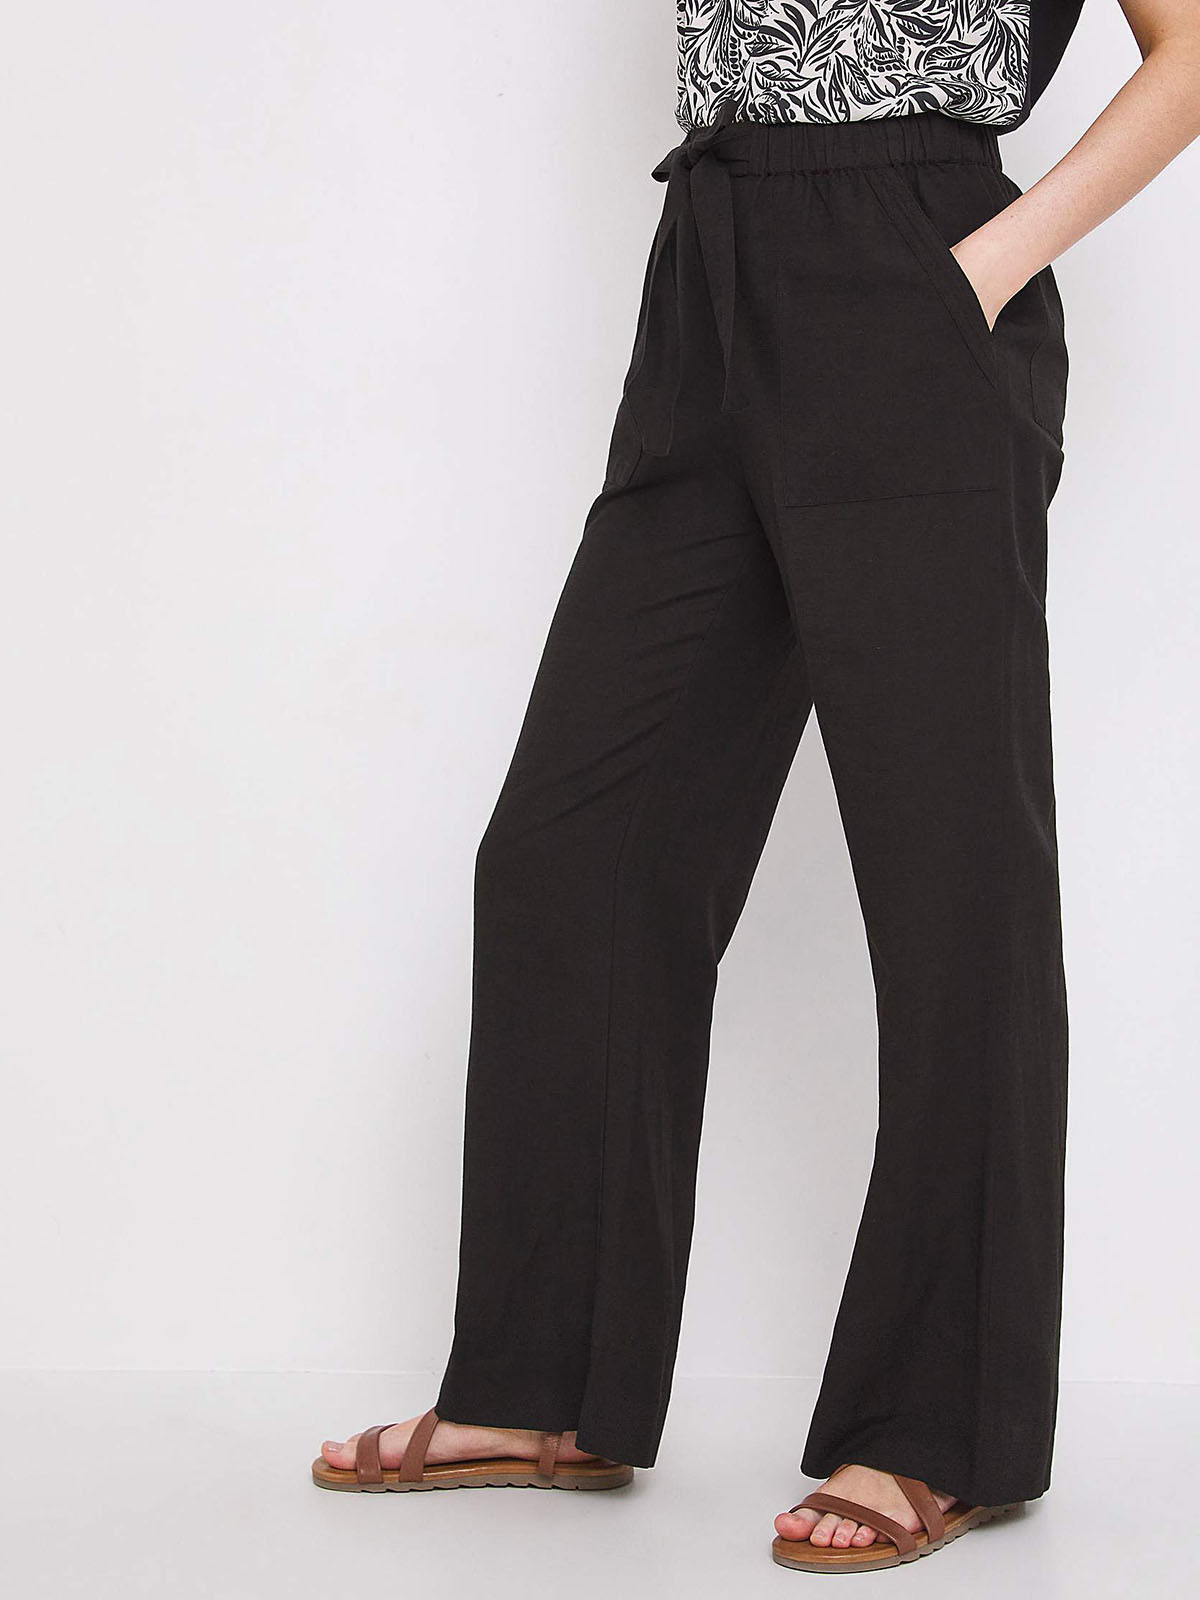 Julipa - - BLACK Linen Blend Trousers - Plus Size 12 to 24